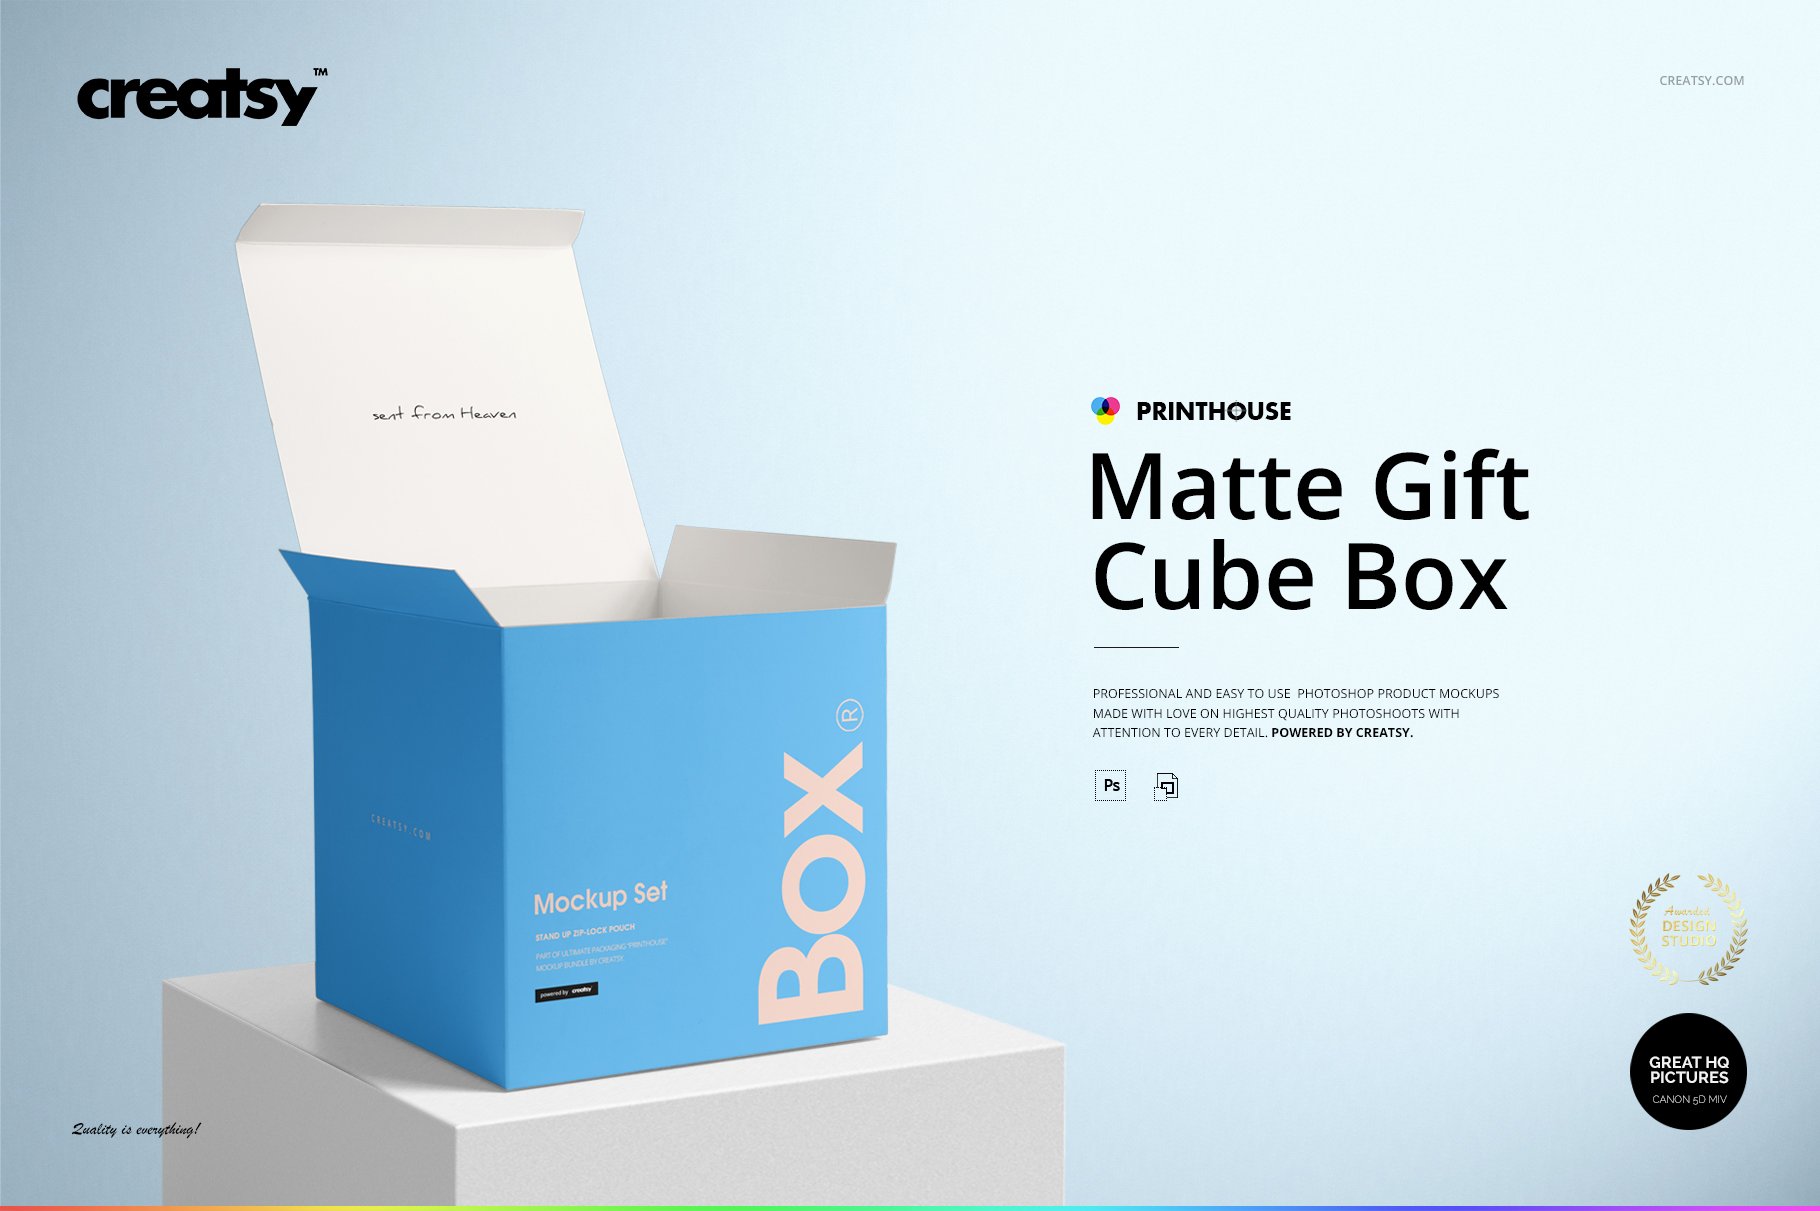 Matte Gift Square Box Mockup Set cover image.